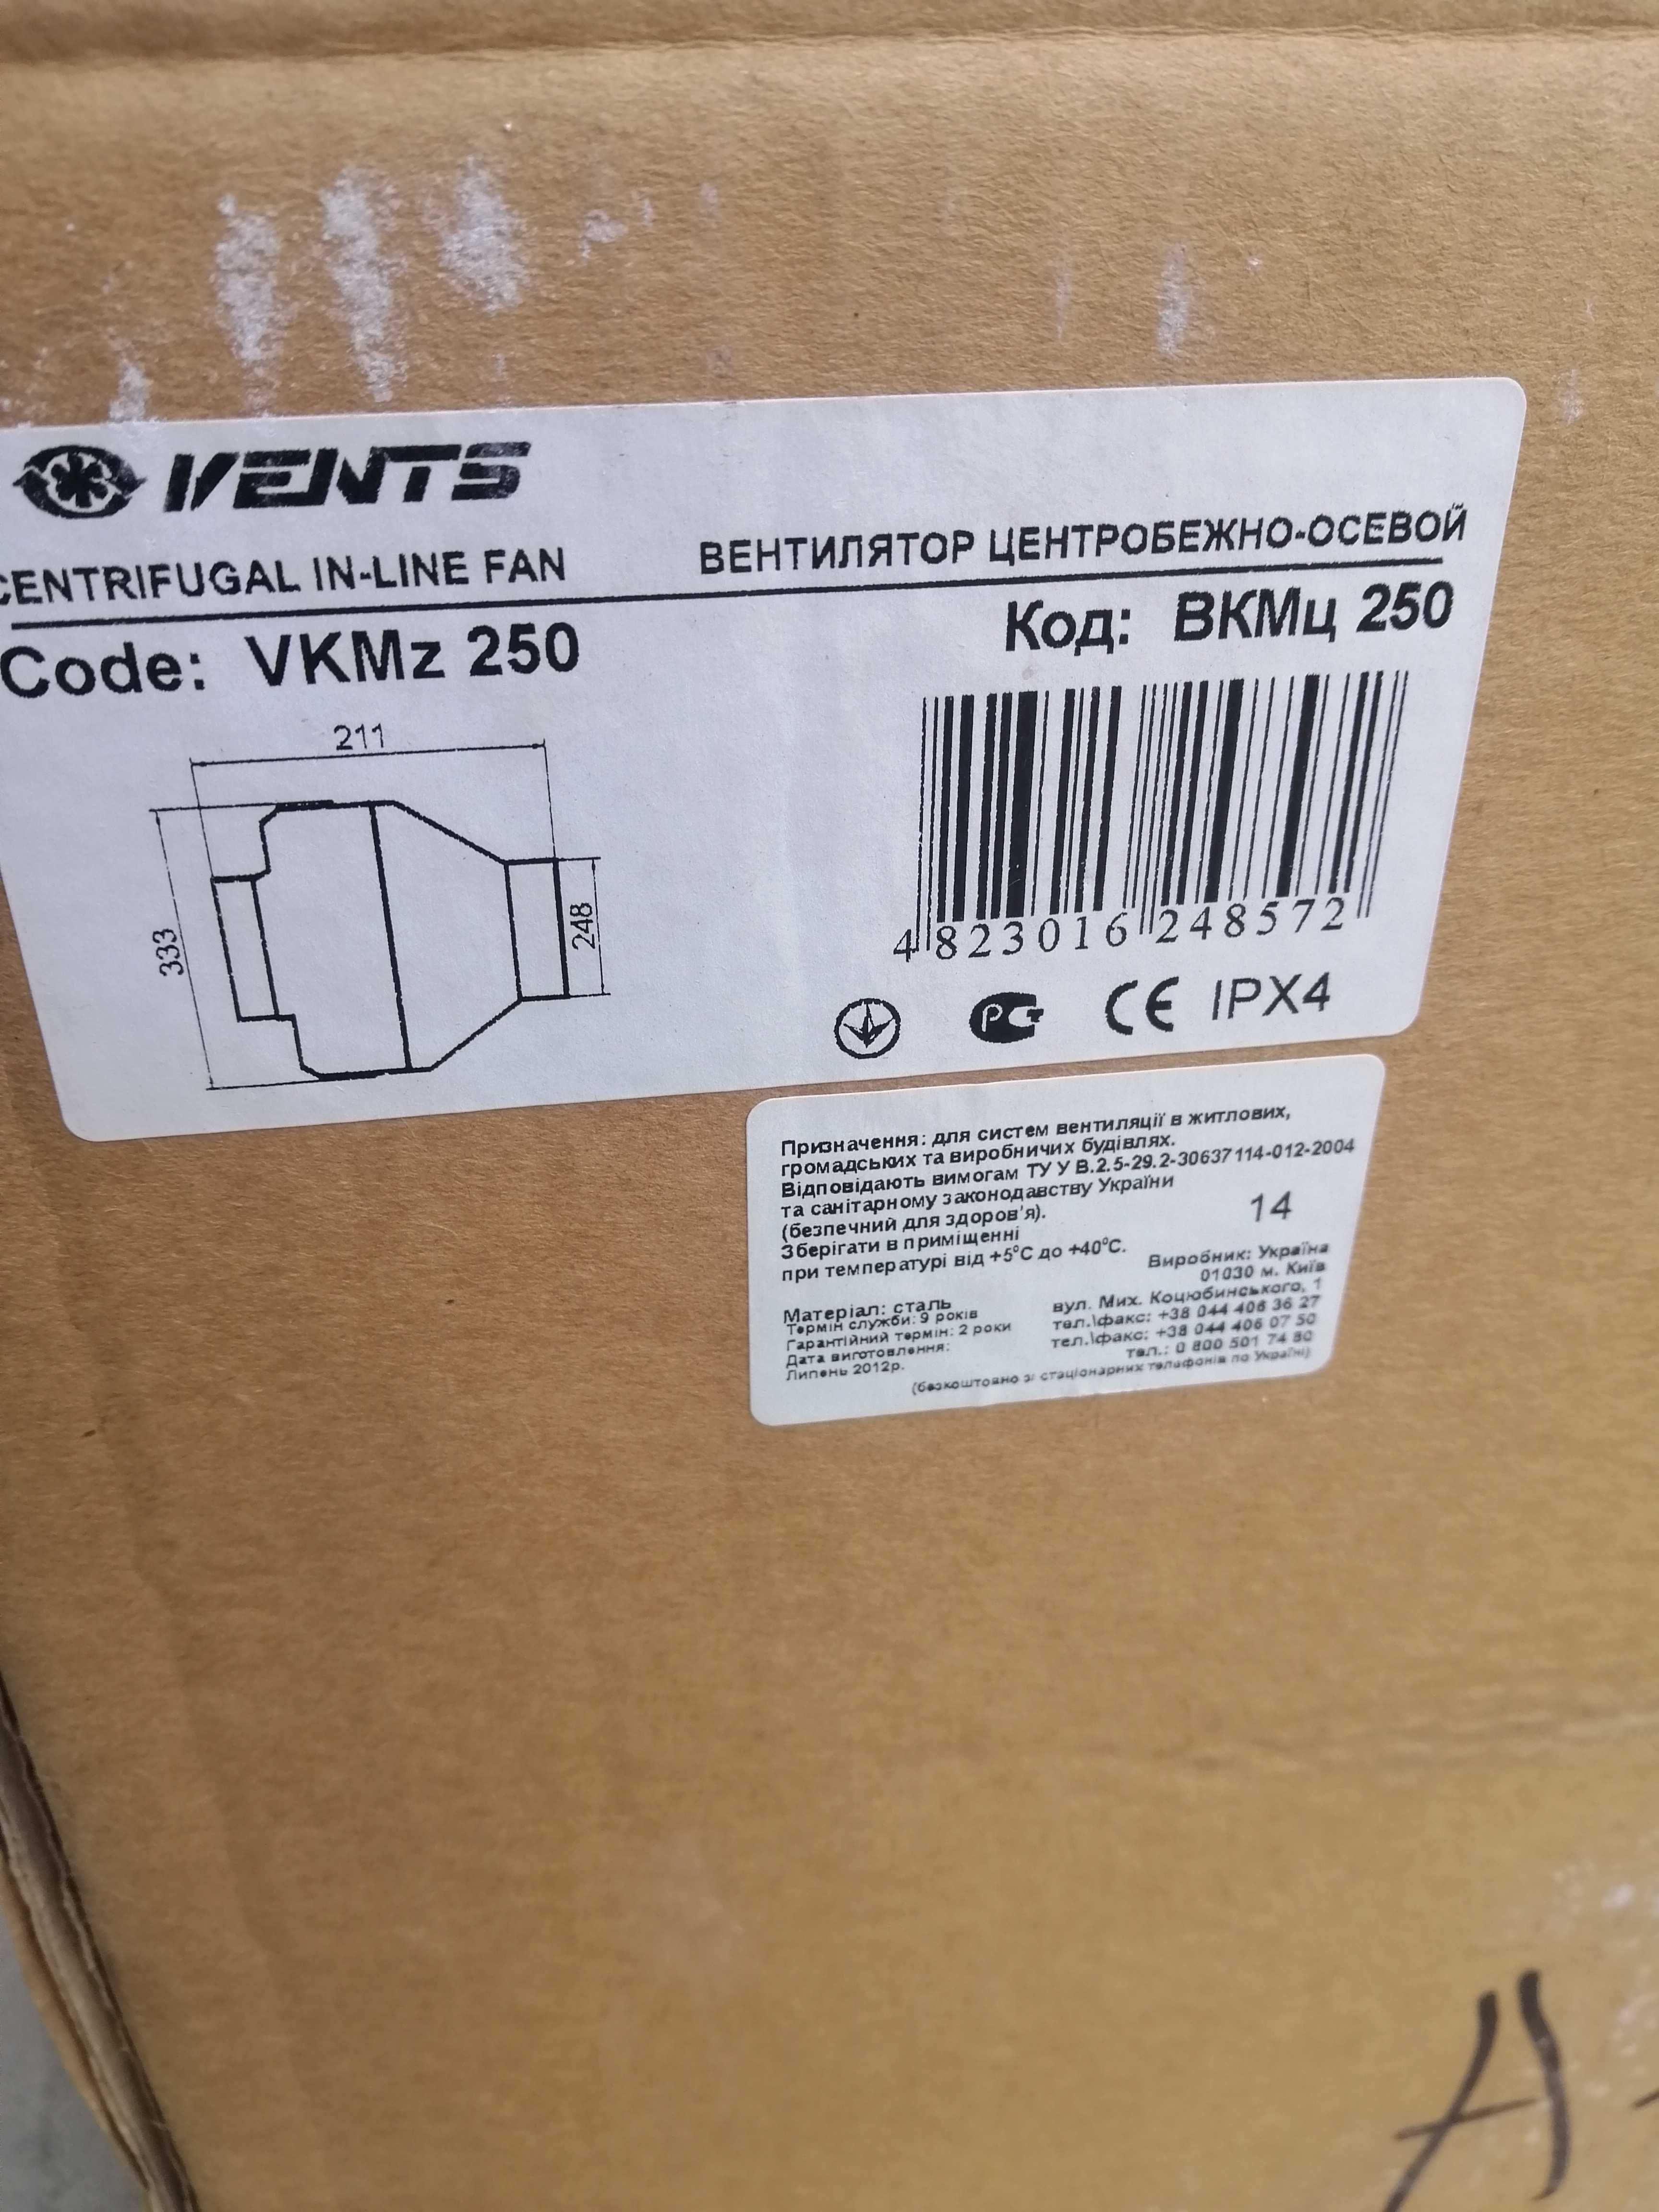 Вентилятор центробежно-осевой ВКМЦ-250